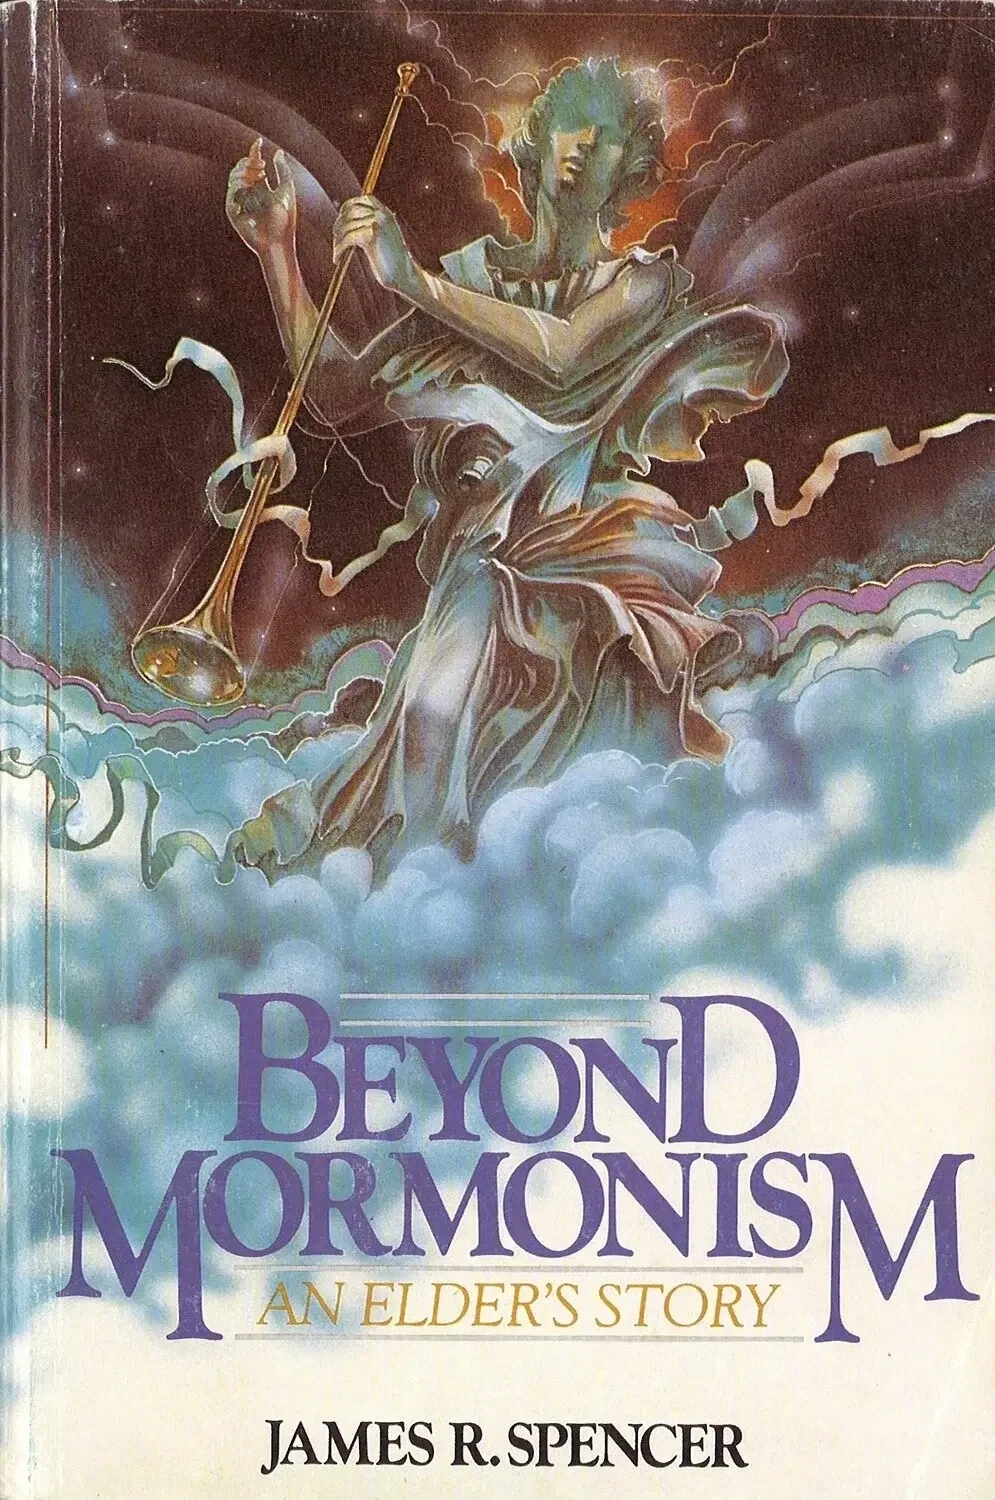 Beyond Mormonism: An Elder's Story by James R. Spencer